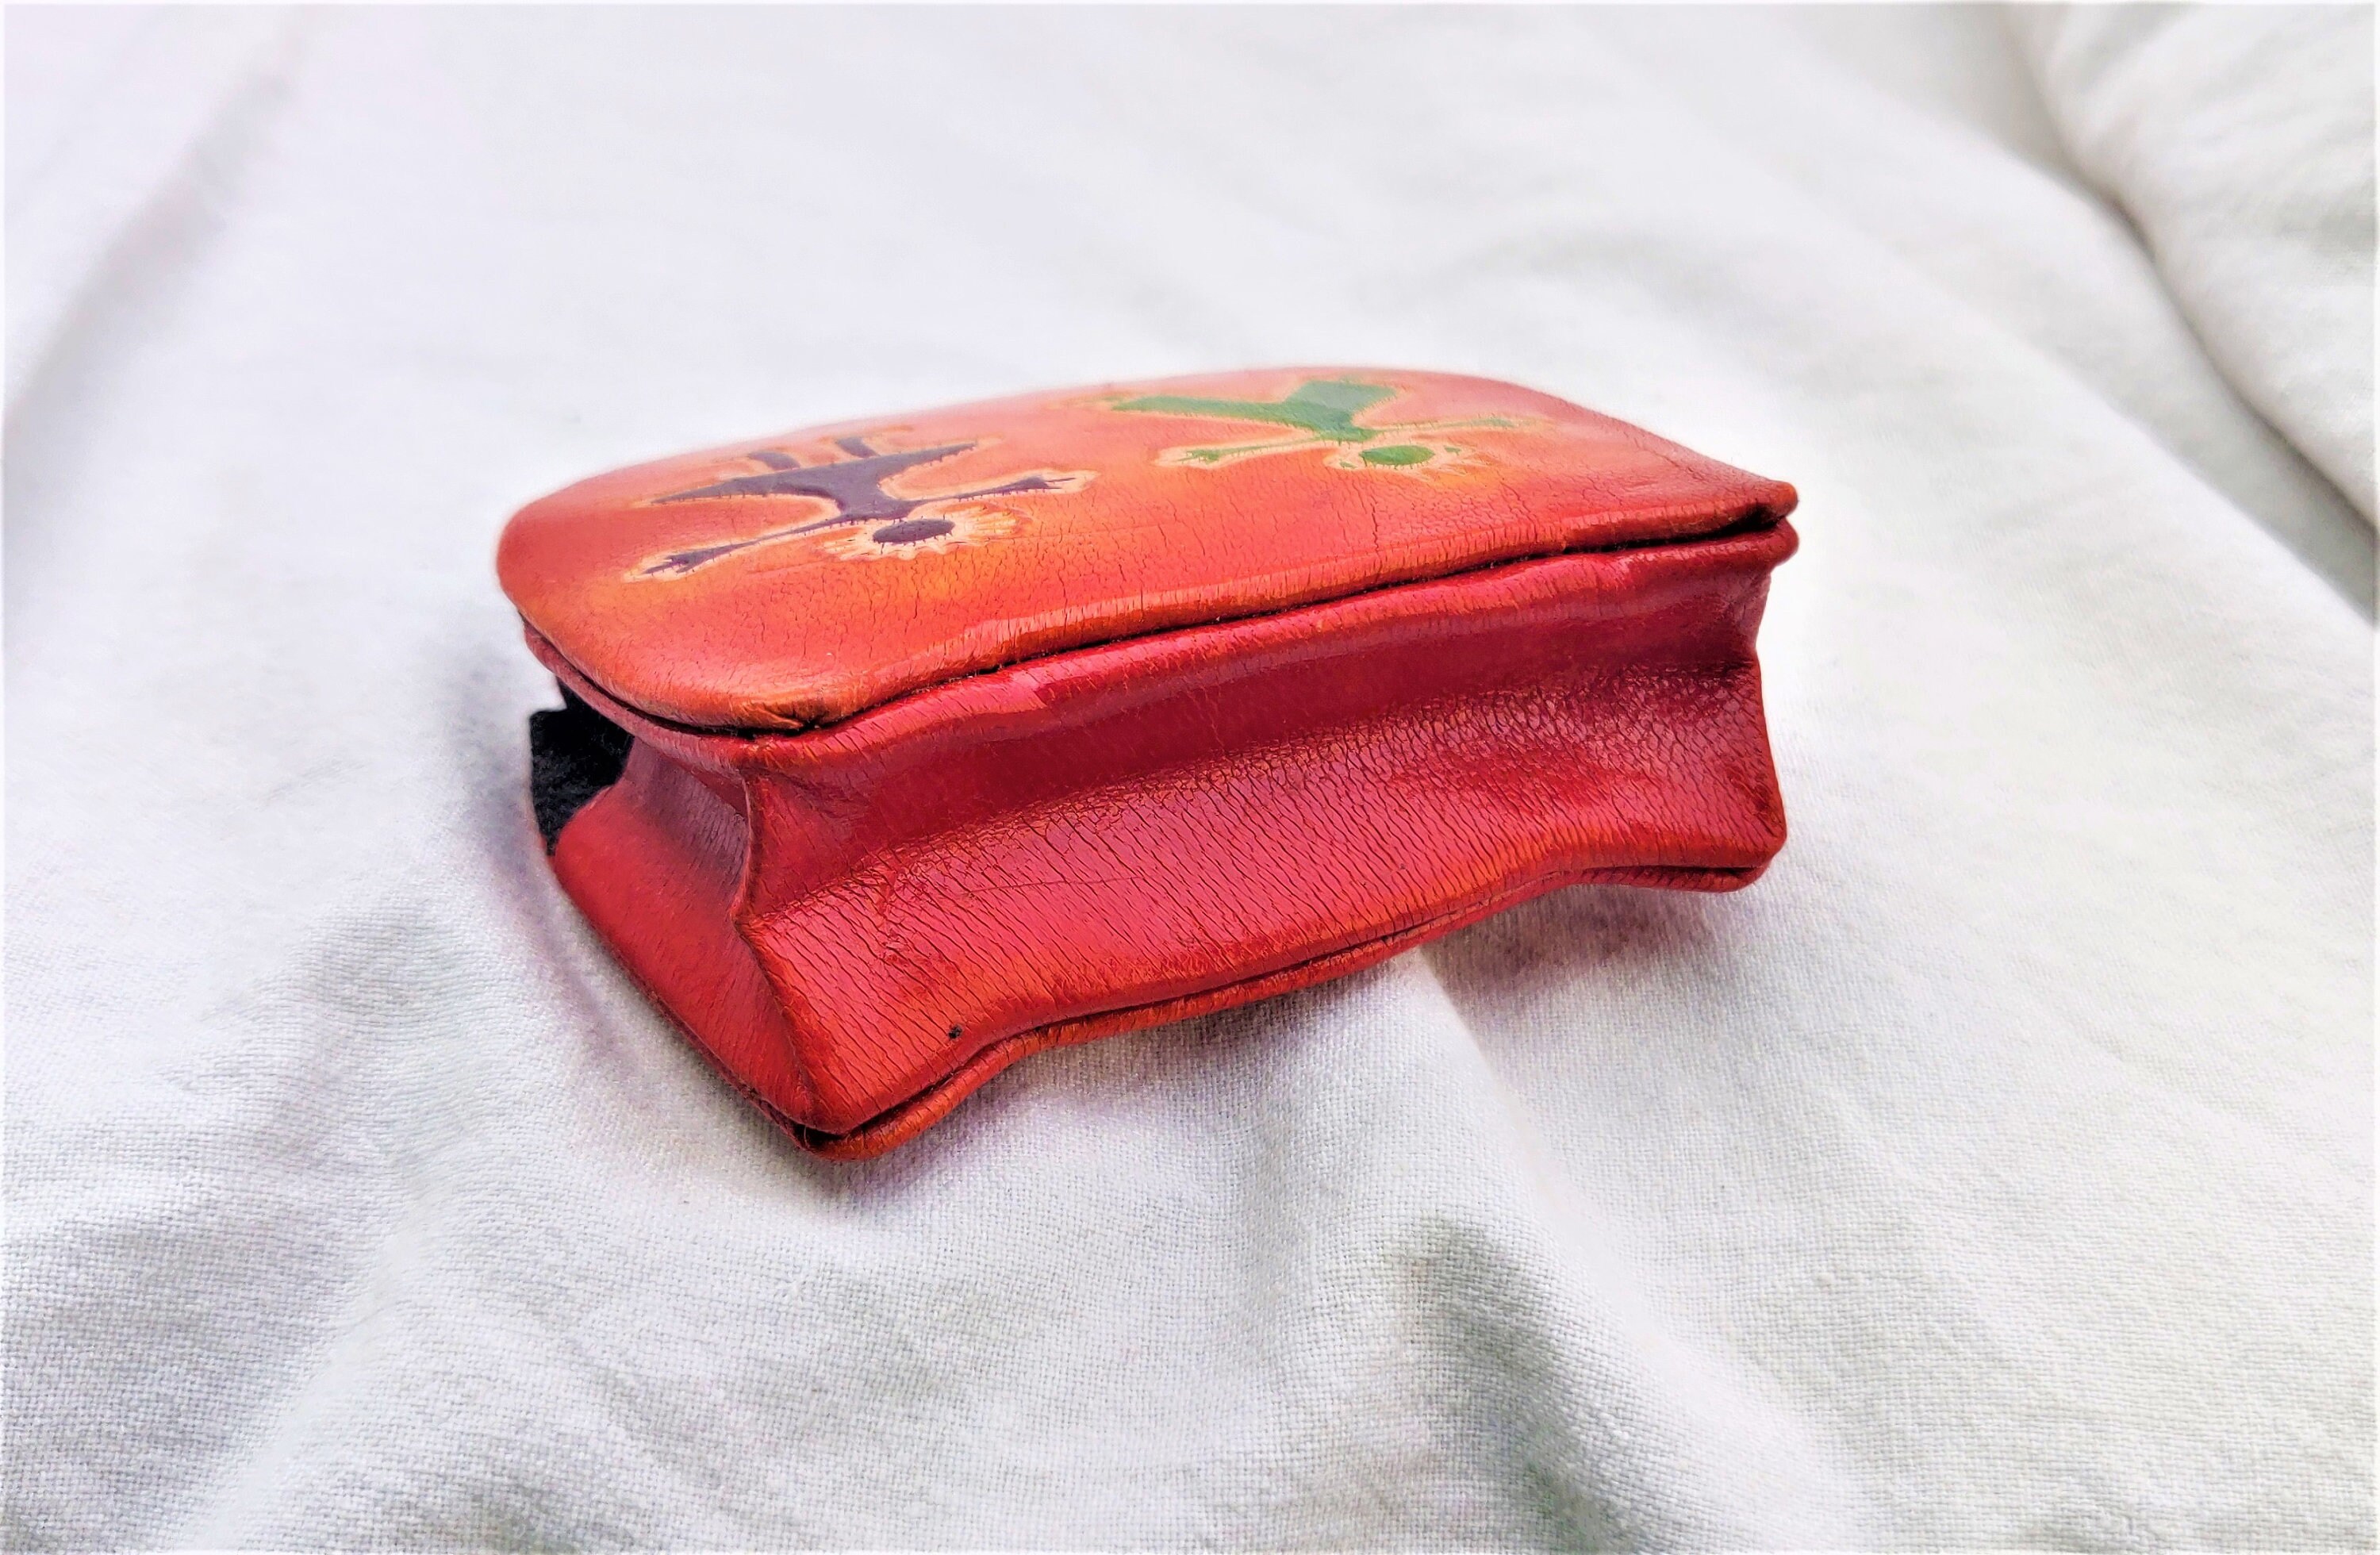 Ladies Leather Shantiniketan Floral Double Lipstick Case | eBay